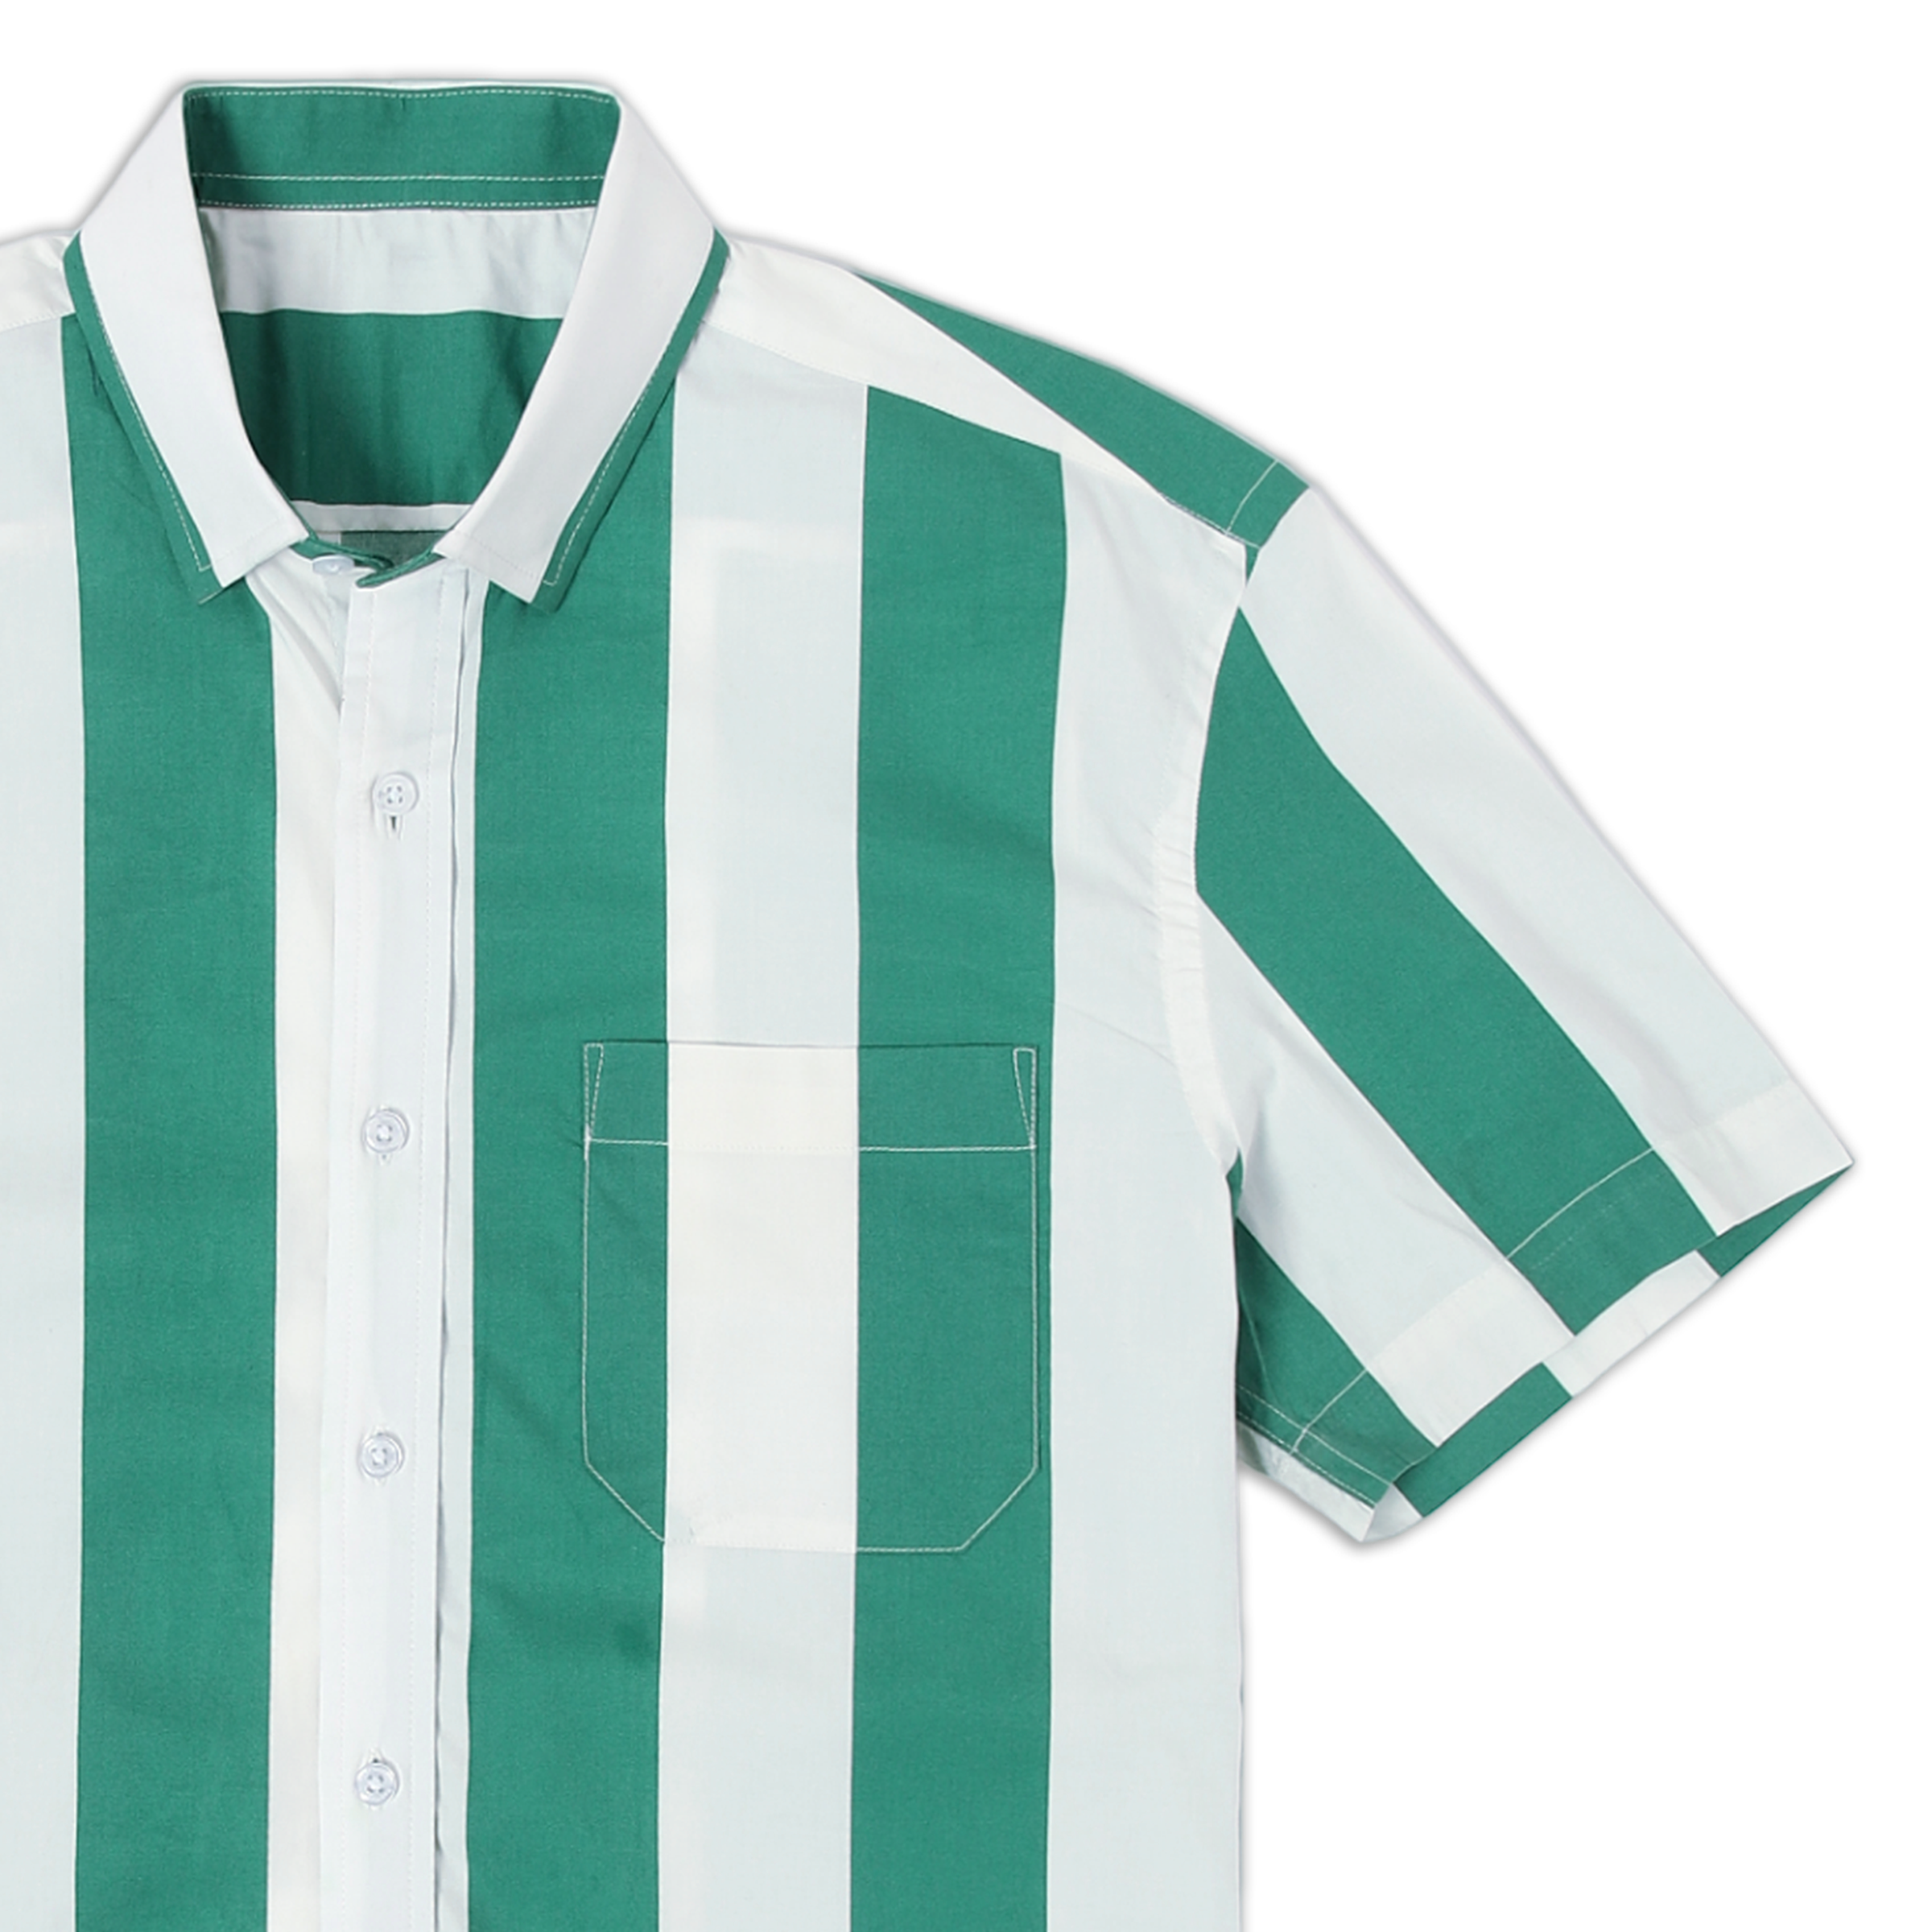 Cabana Shirt Green Stripe close up of collar and left front pocket